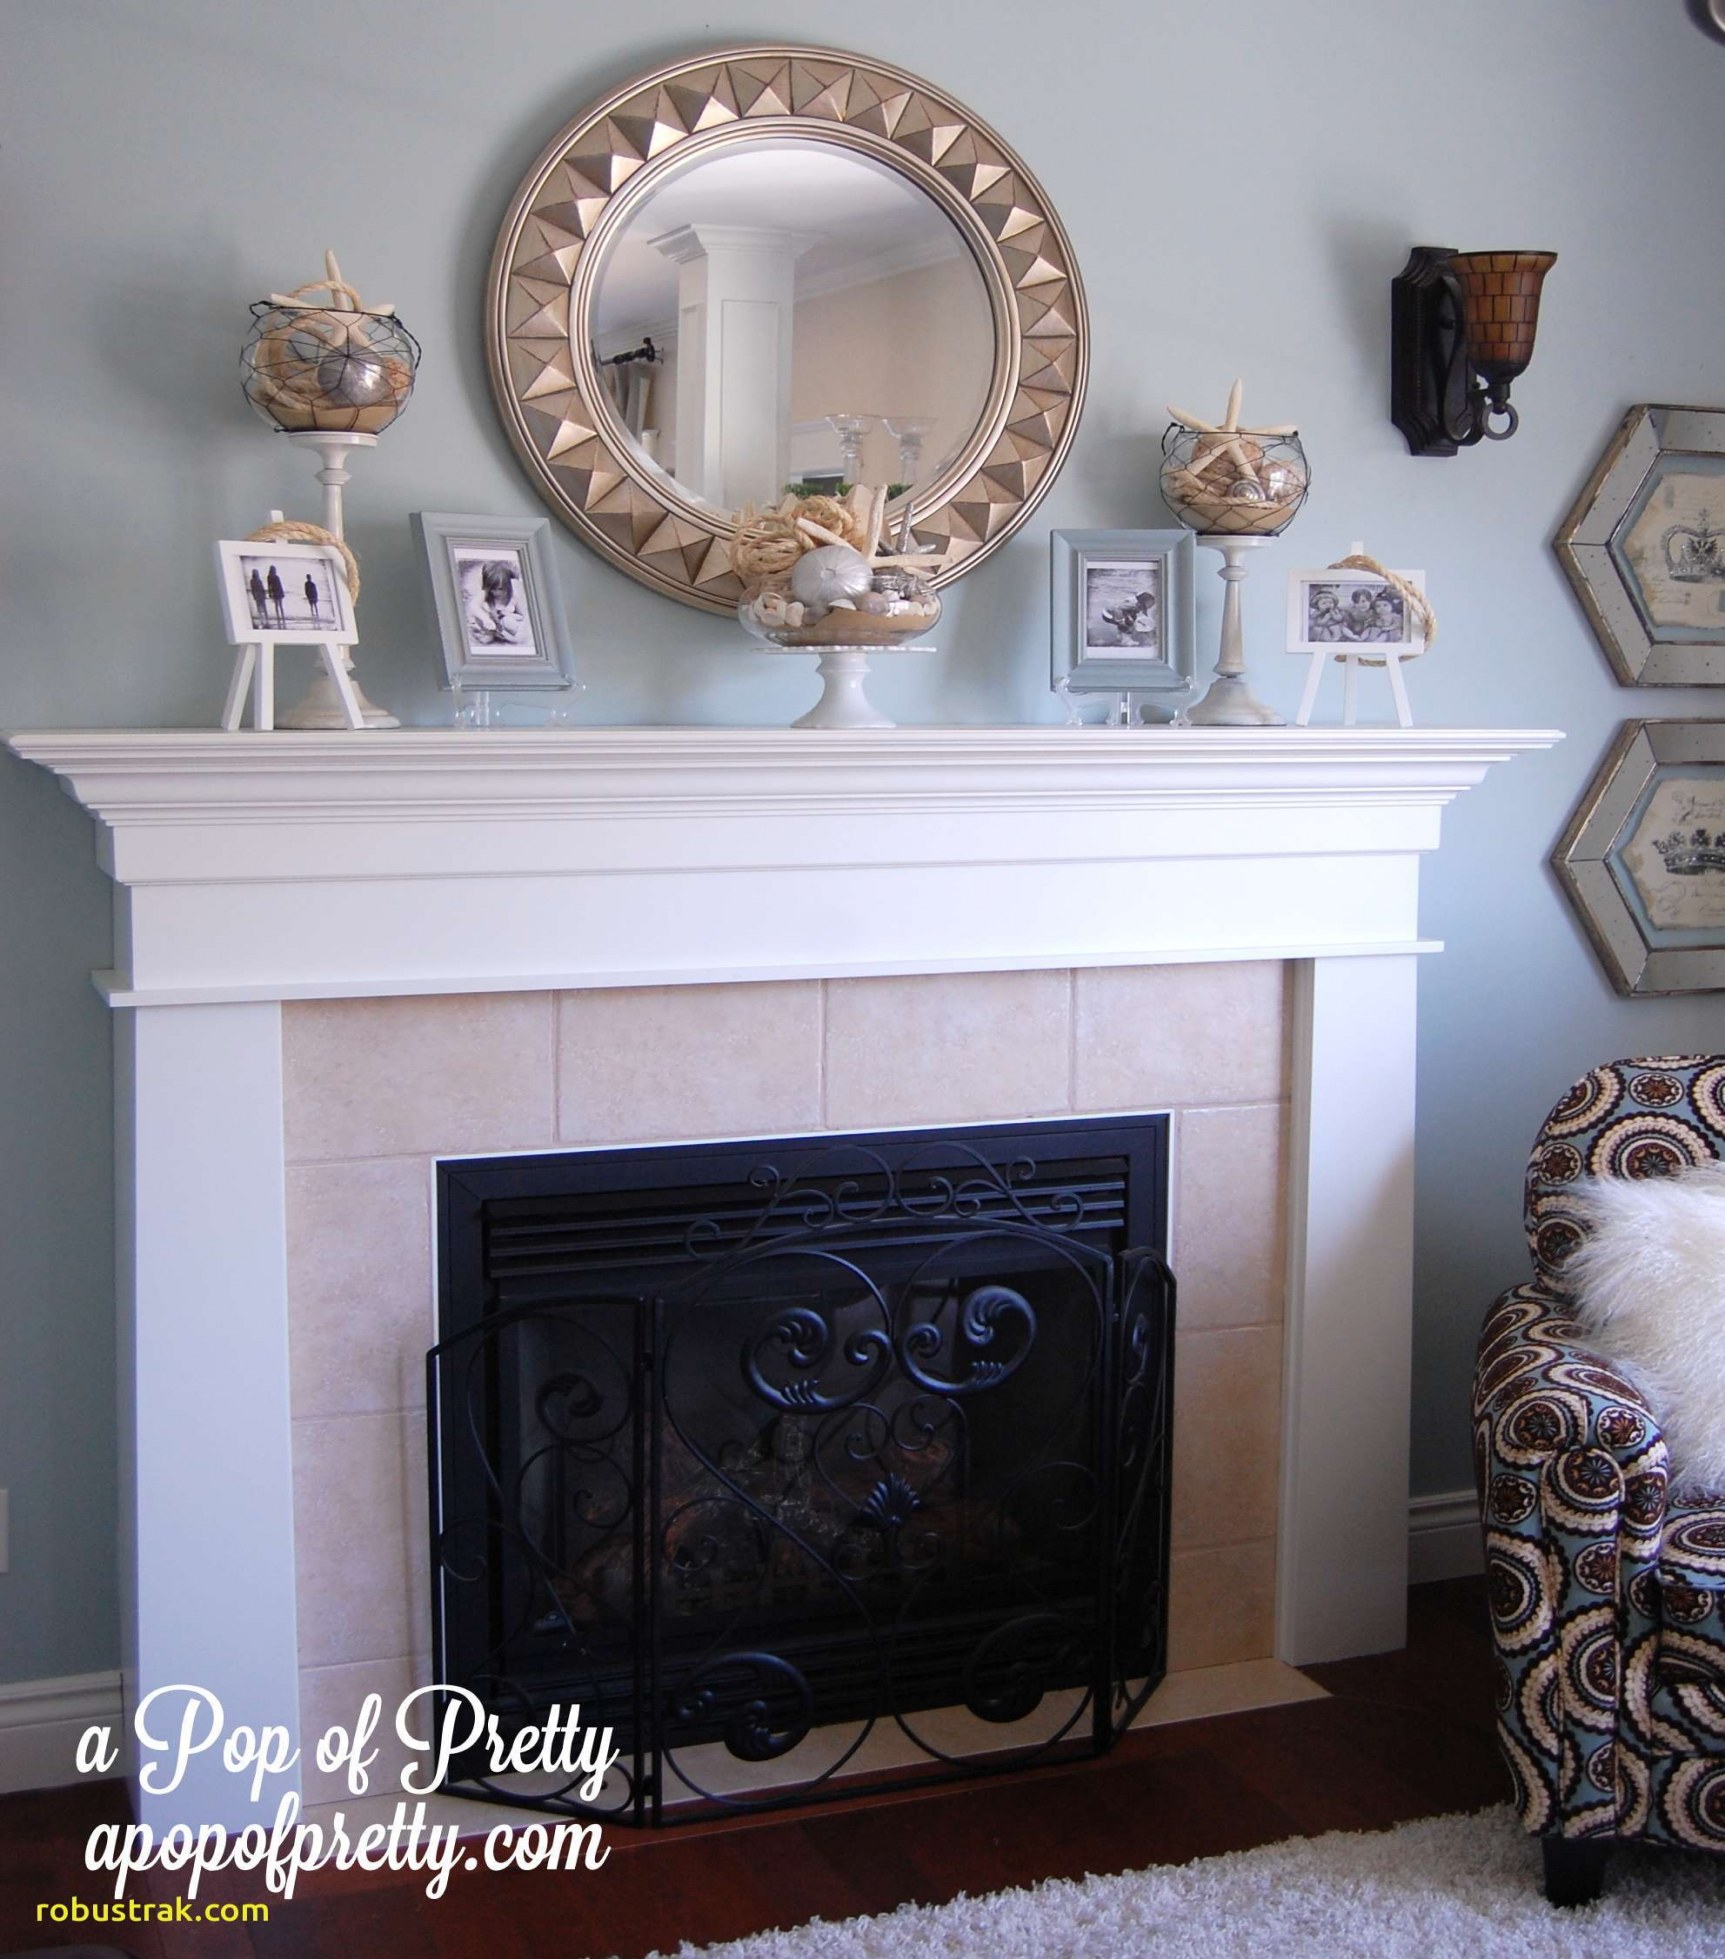 Mirrored Fireplace Inspirational Mantel Decorating Ideas 21 New Fireplace Mantel Decorating